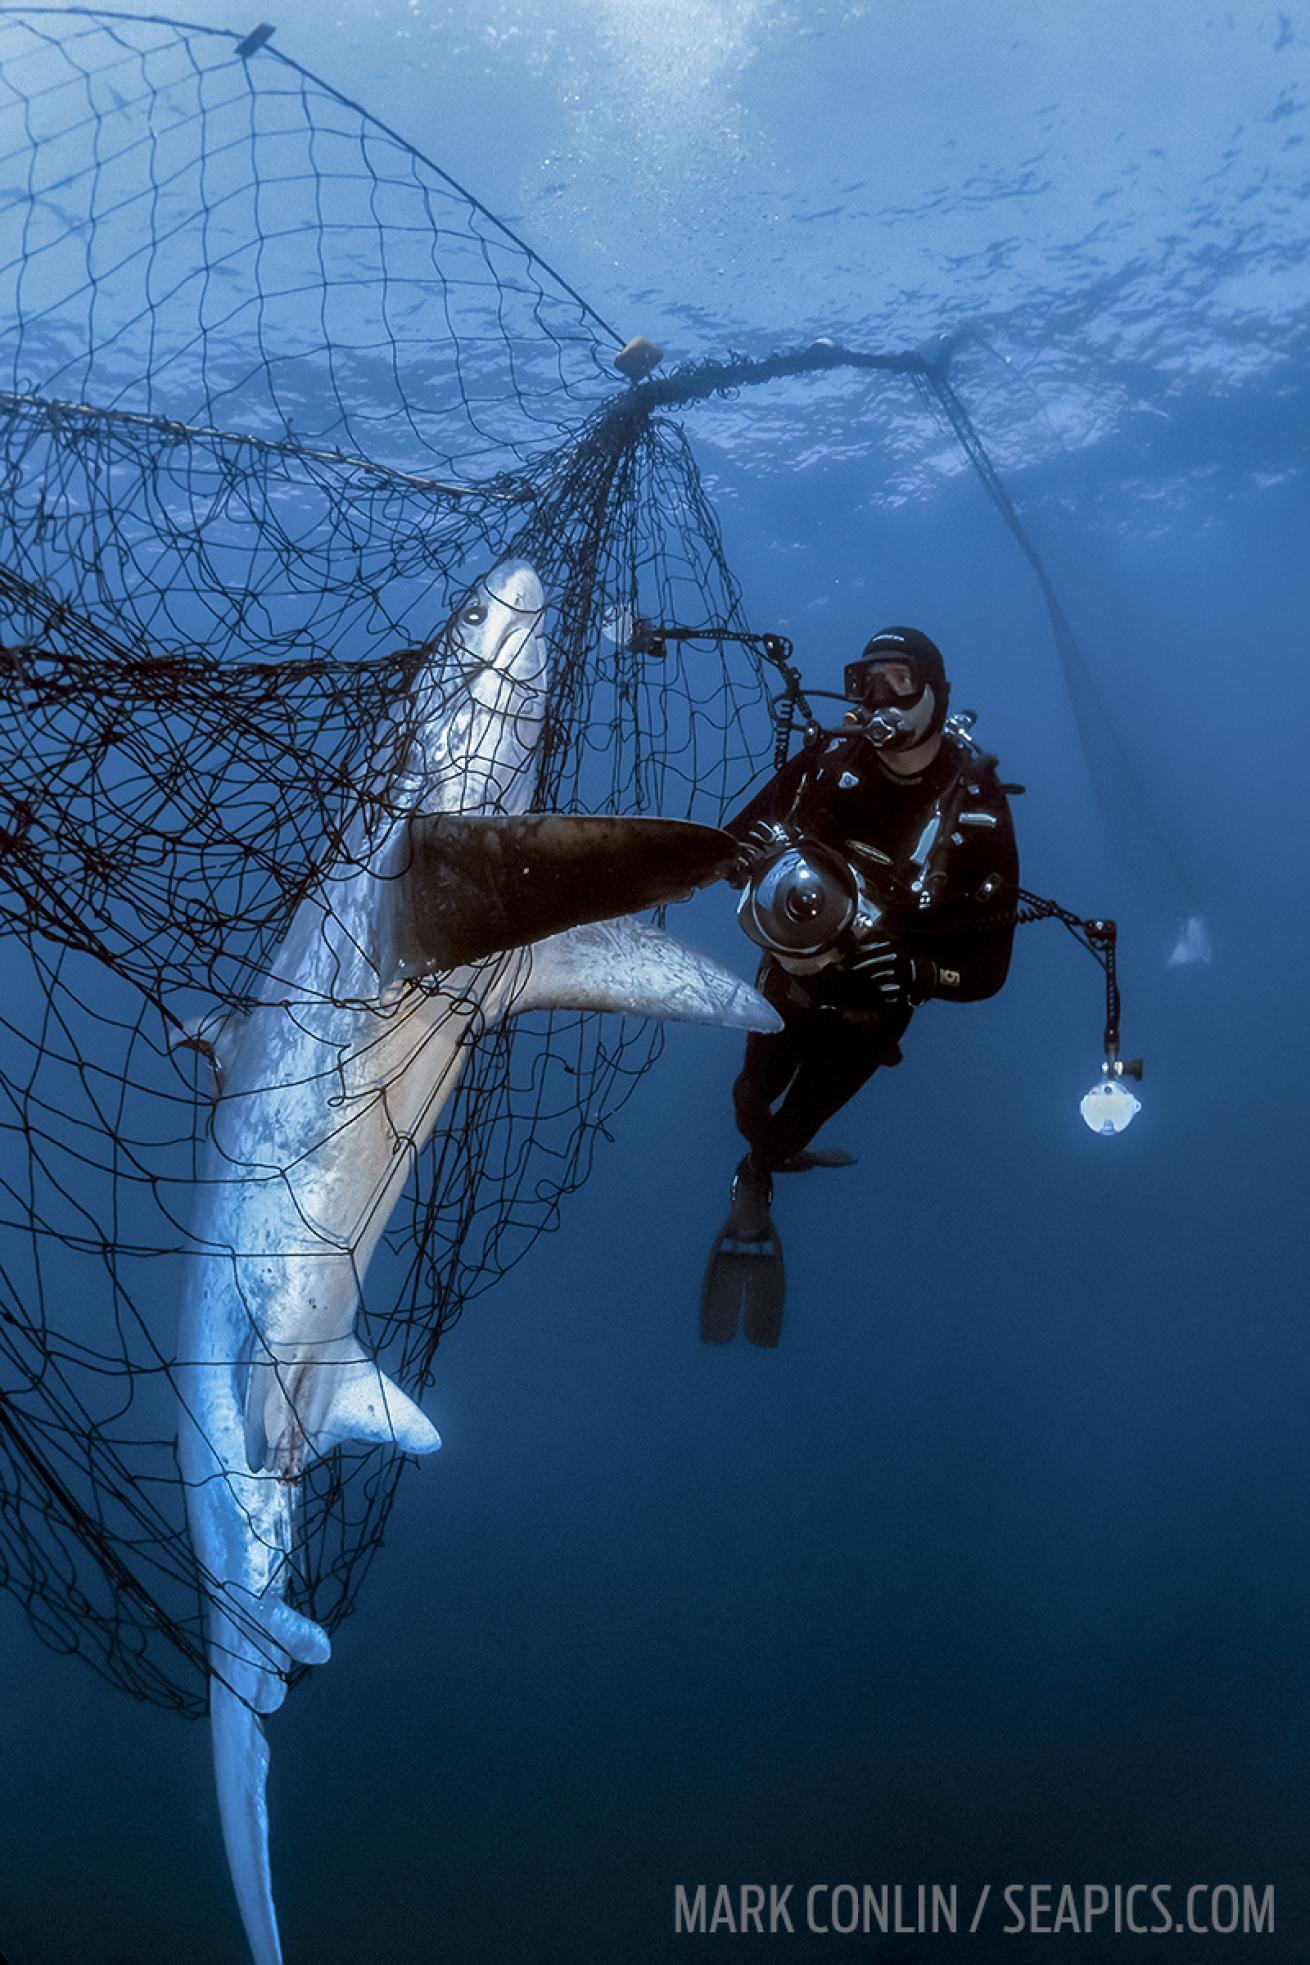 Scuba diver next to blue shark caught in fishing net